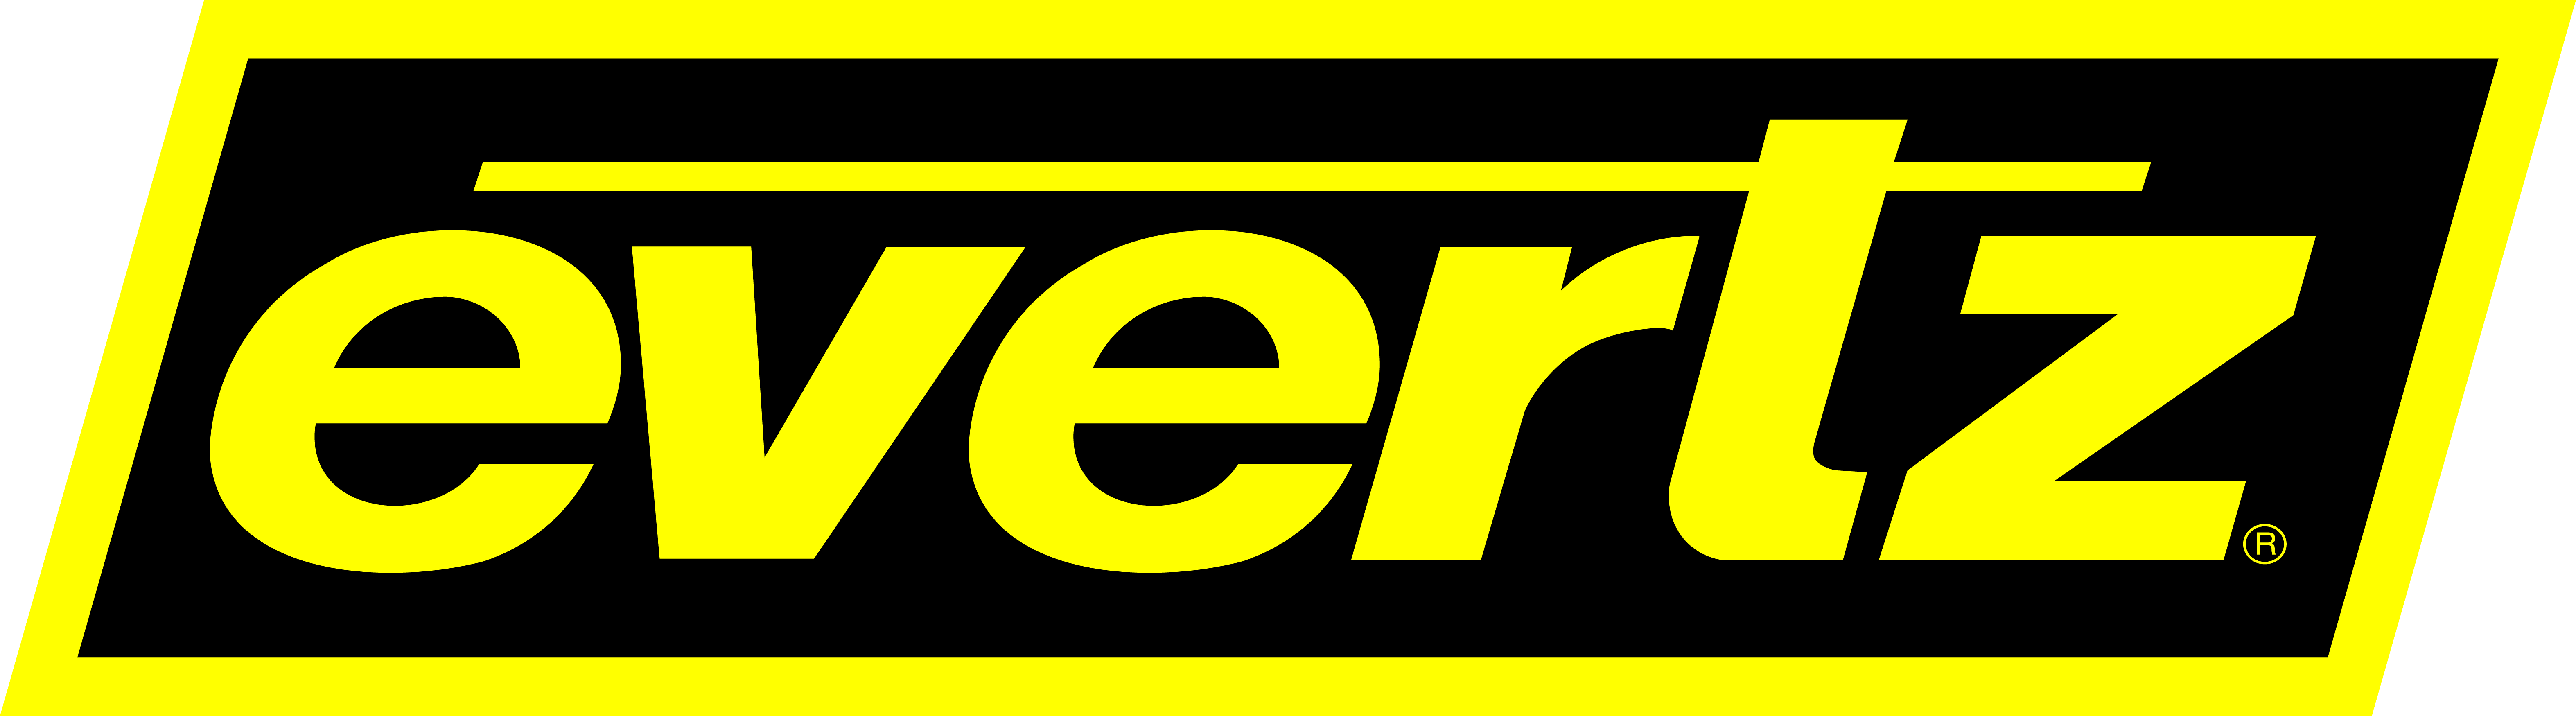 evertz-rgb-logo